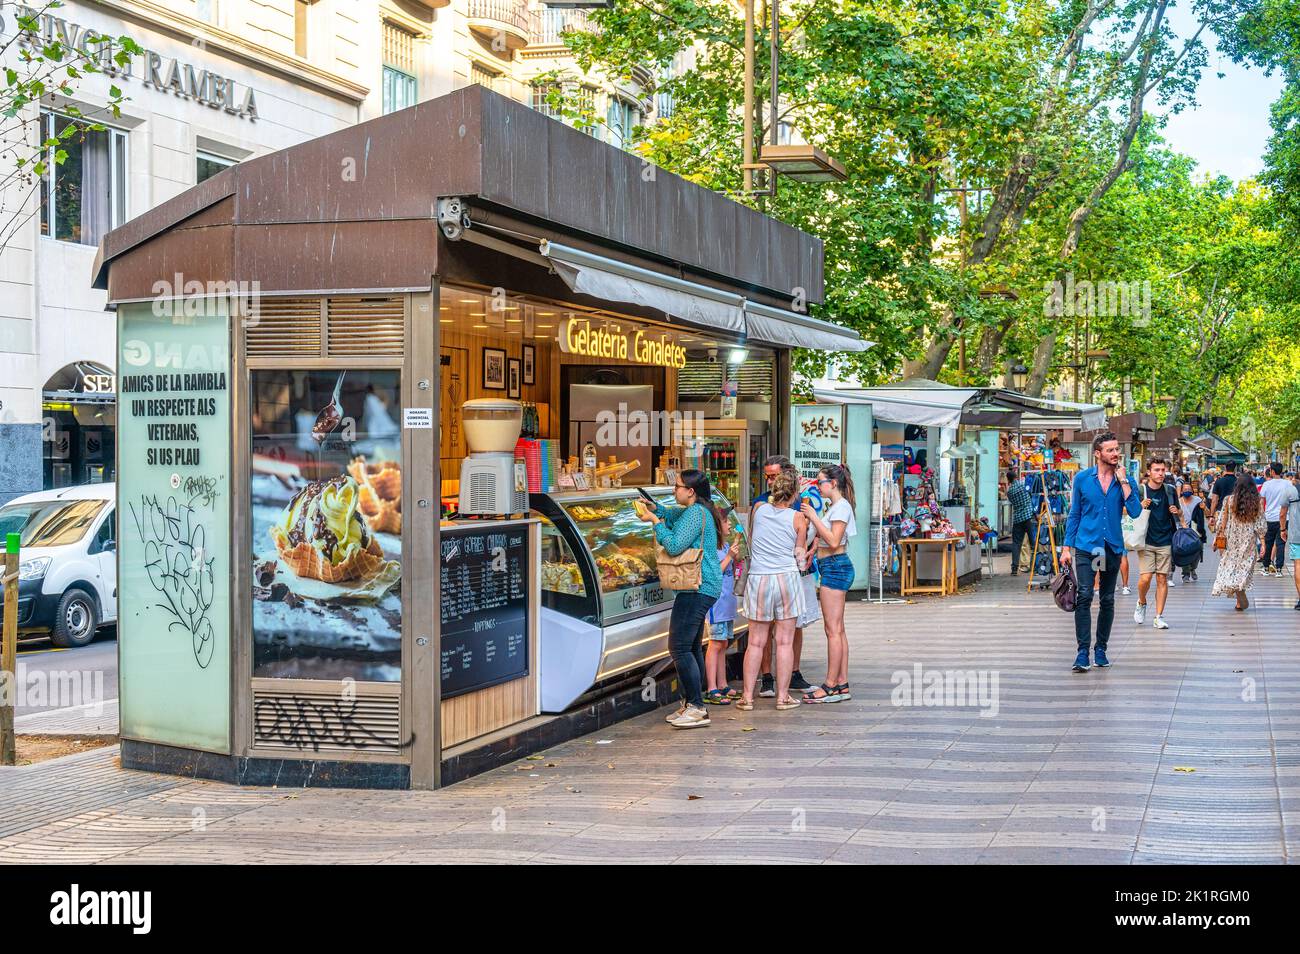 People buy food in a kiosk set in La Rambla. Tourists also walk in the scene. Stock Photo